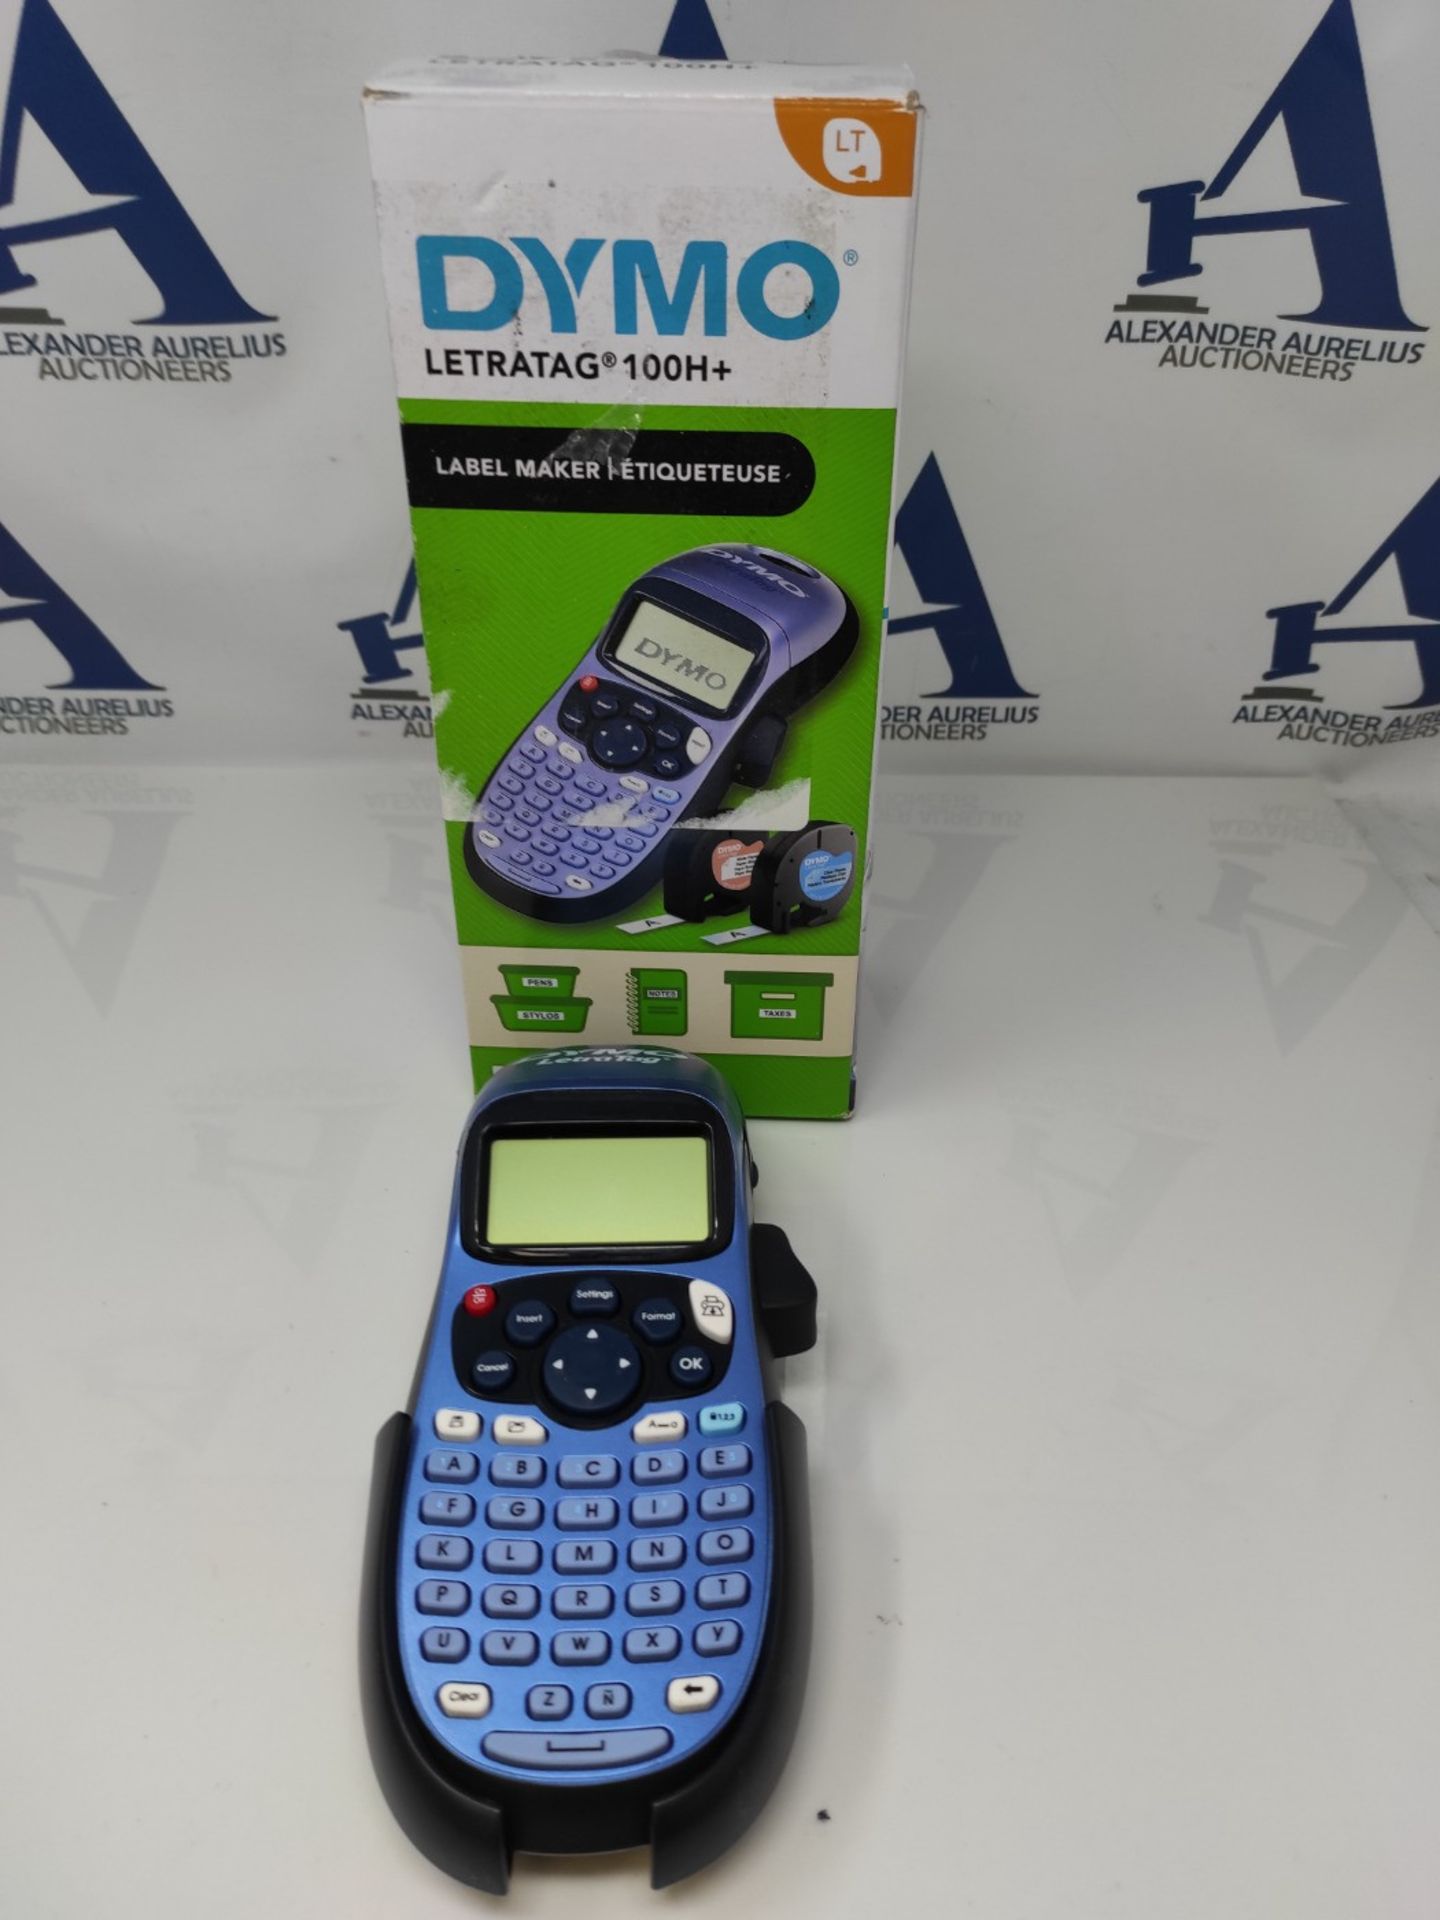 Dymo LetraTag LT-100H Label Maker Starter Kit+, Handheld Label Printer Machine with Pa - Bild 2 aus 2